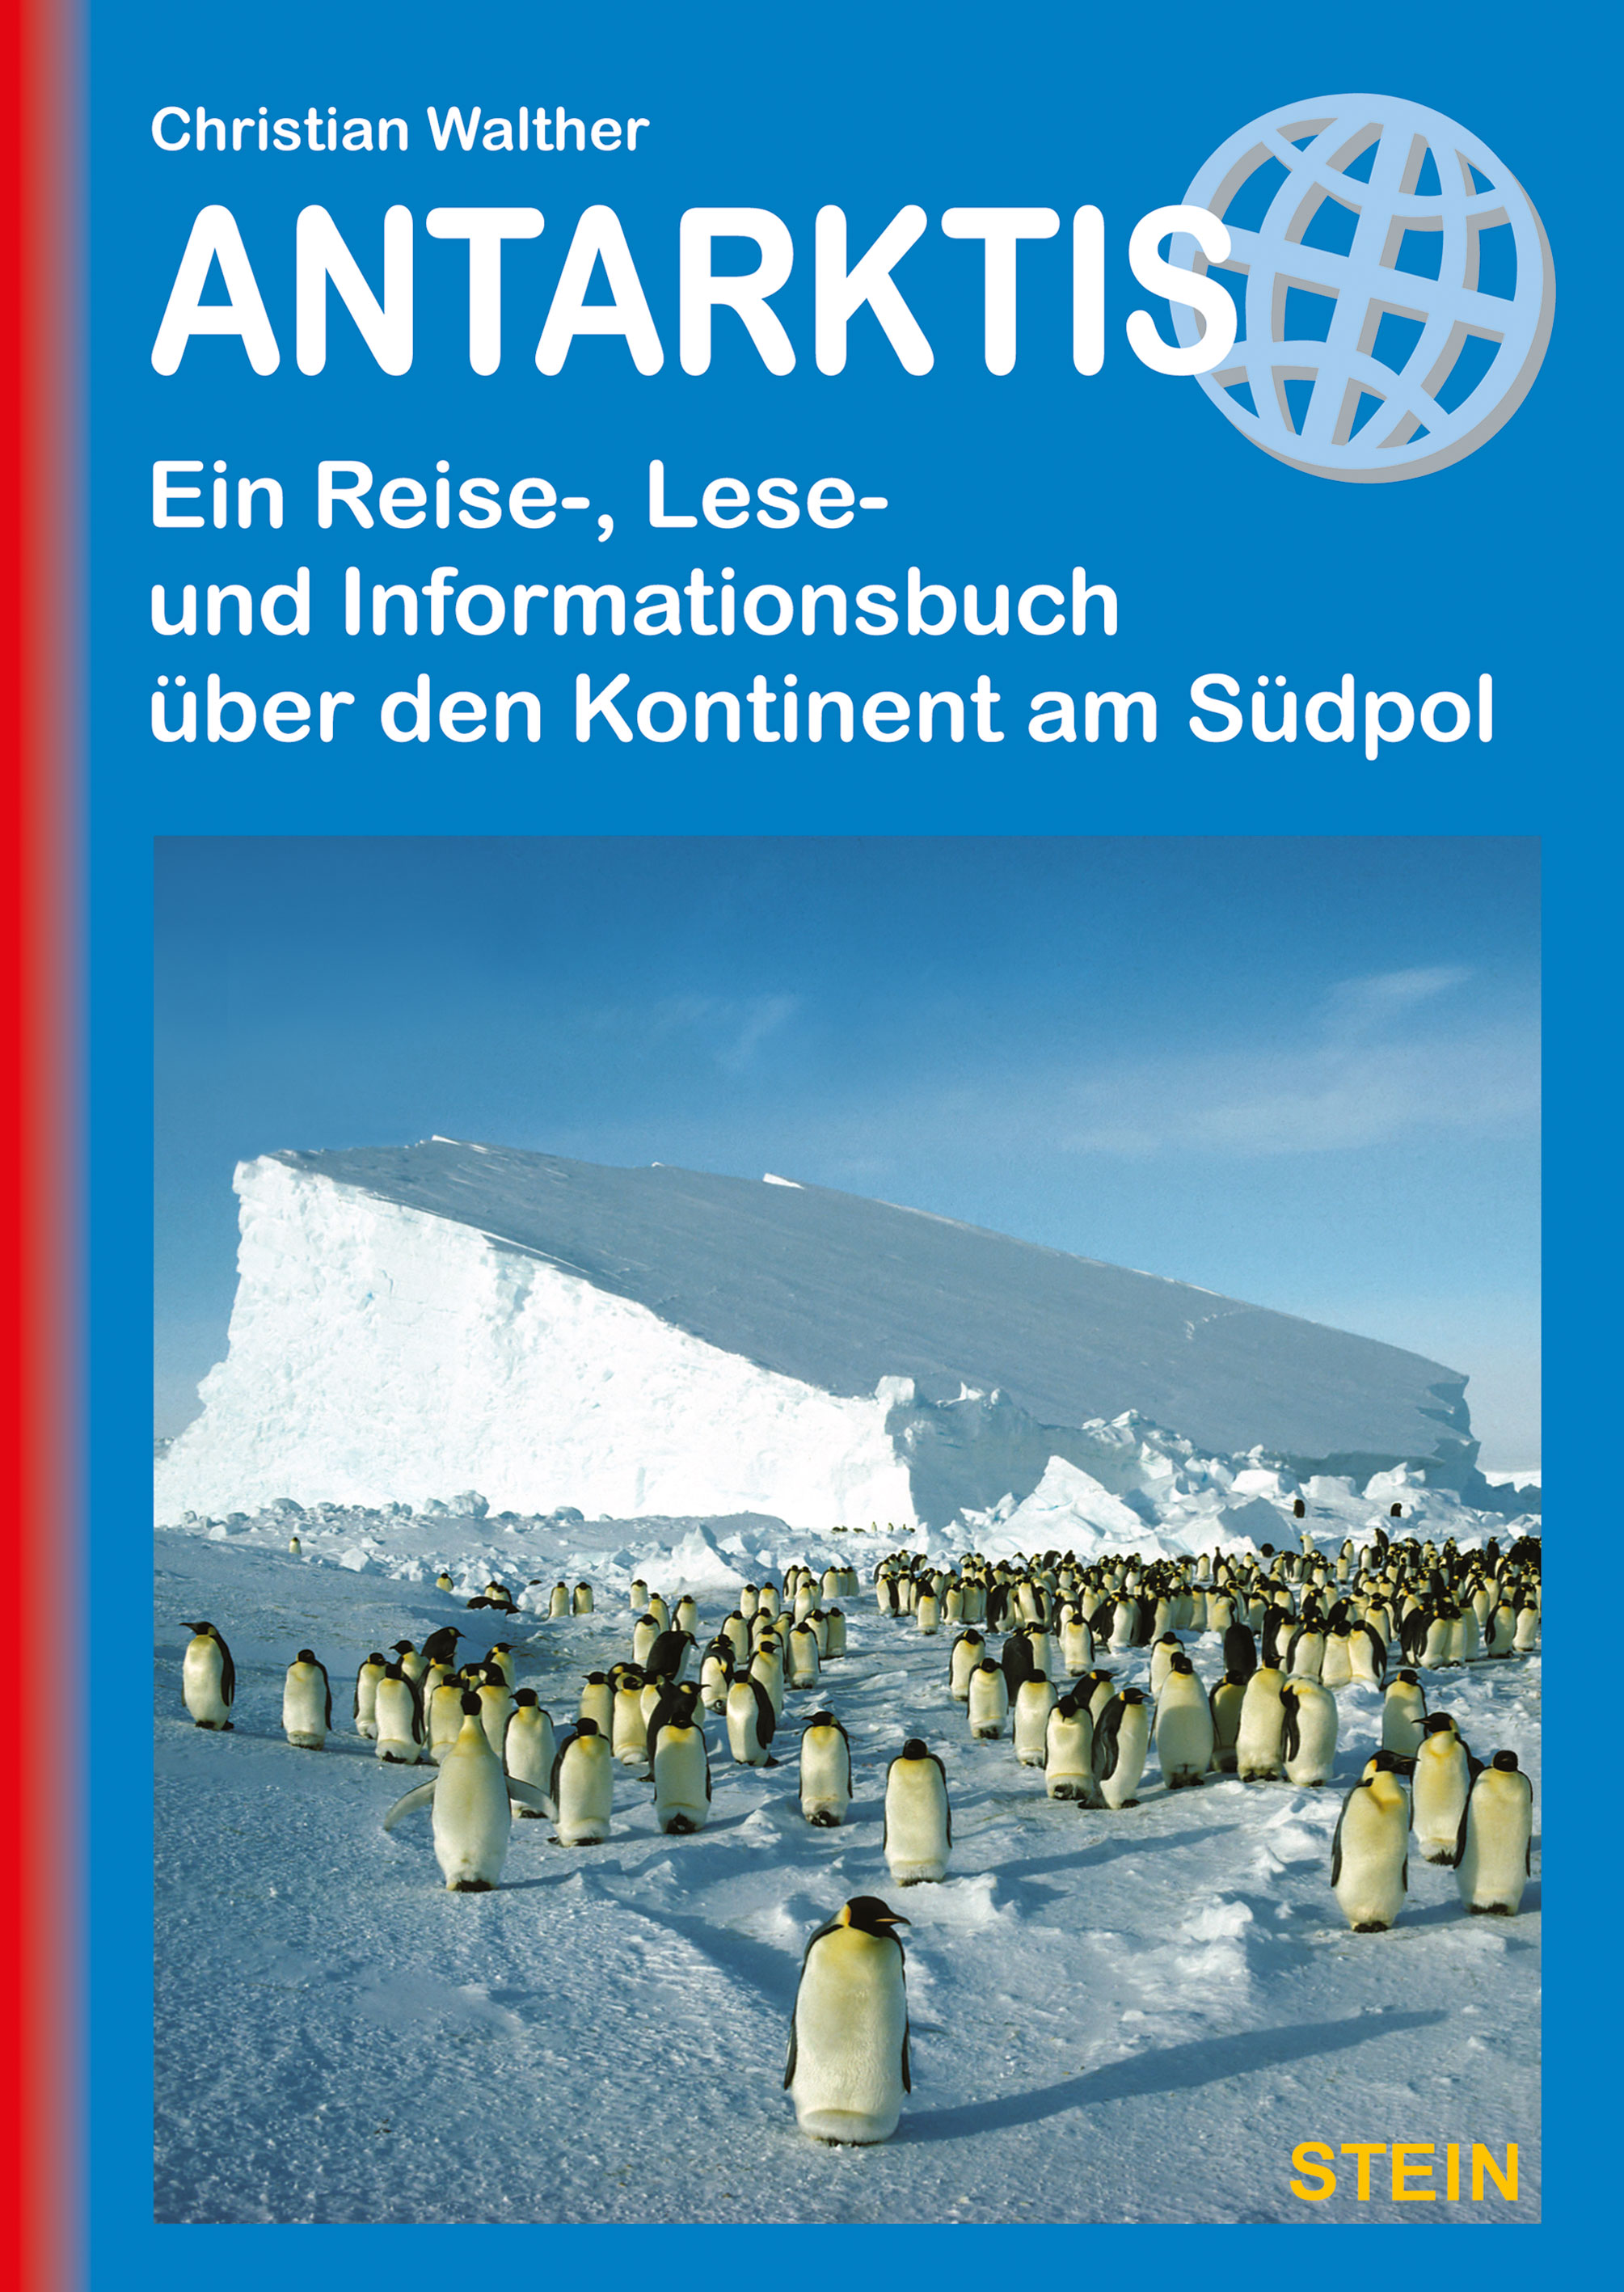 Antarktis - Reise, Lese, Information